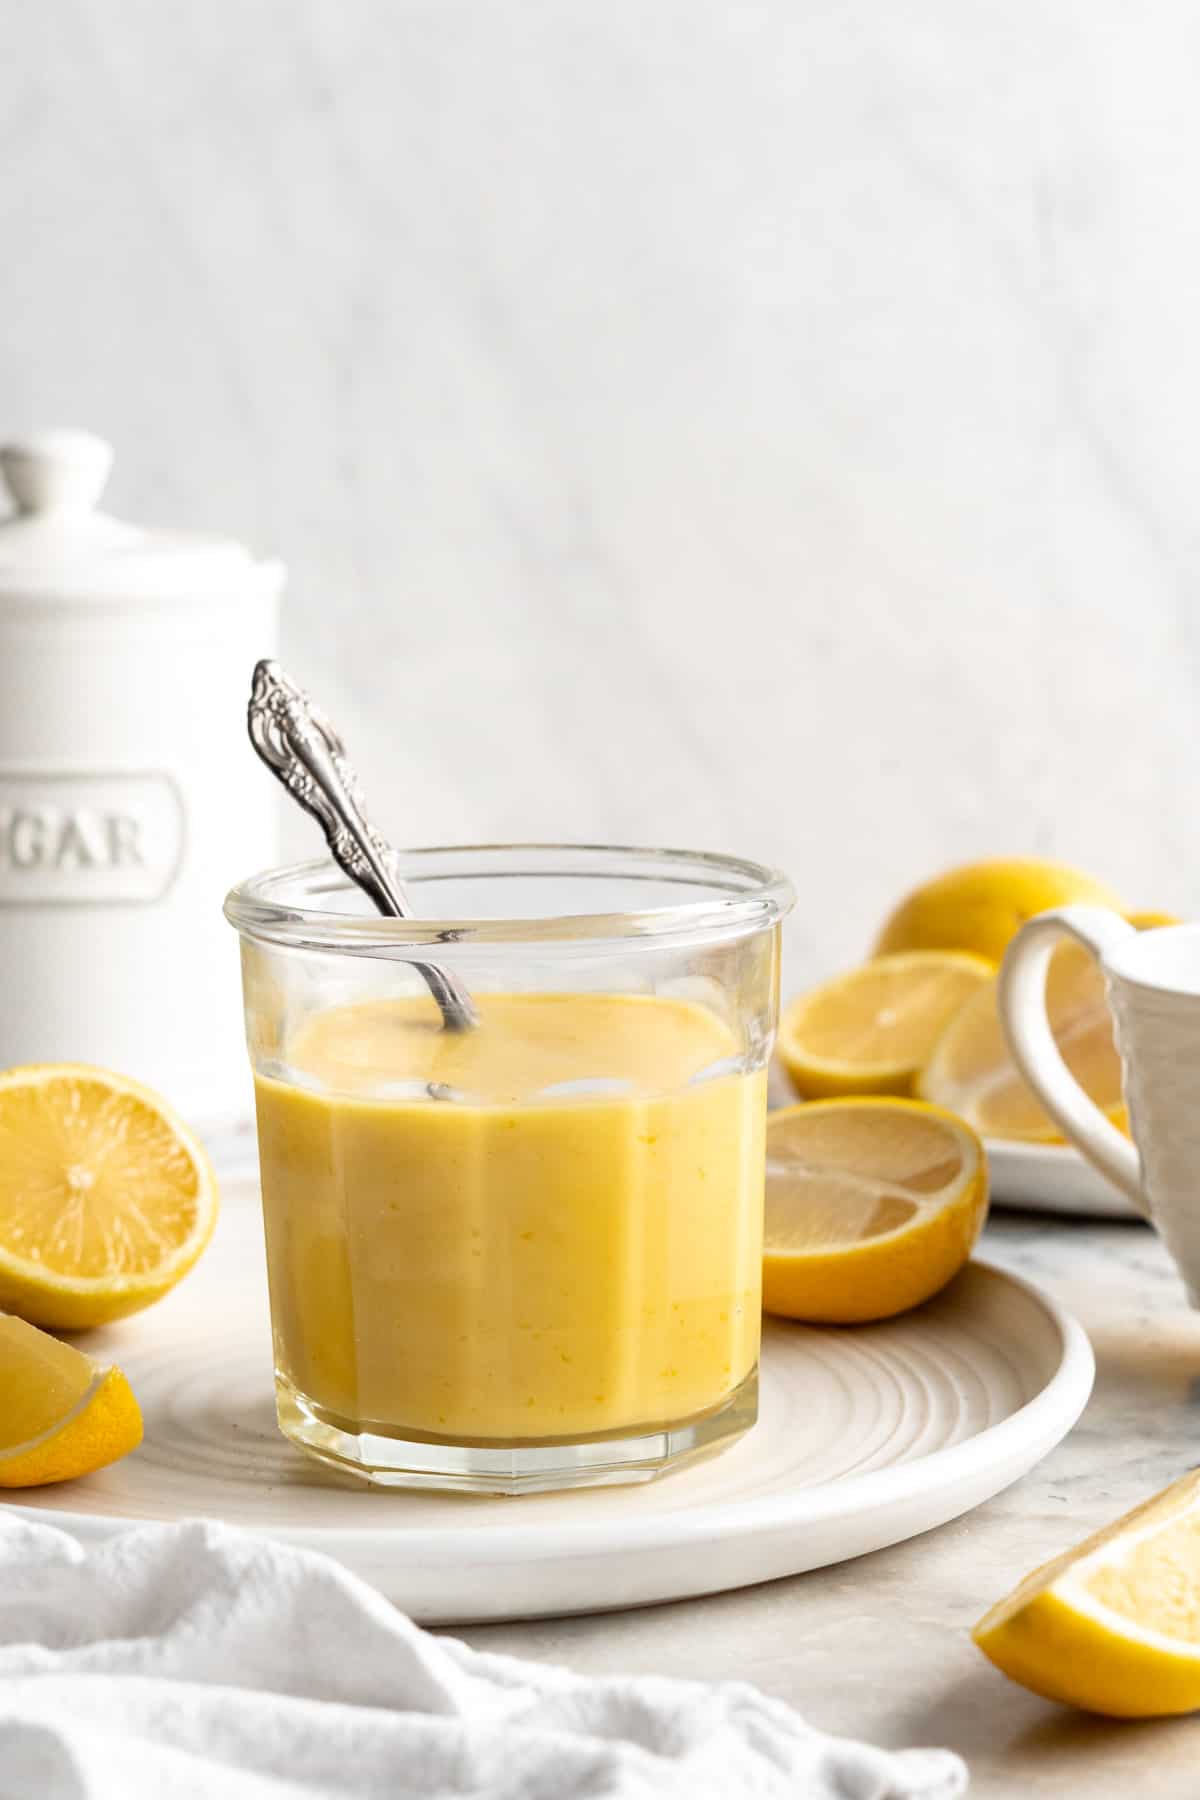 Jar of vegan lemon curd with spoon on plate with halved lemons